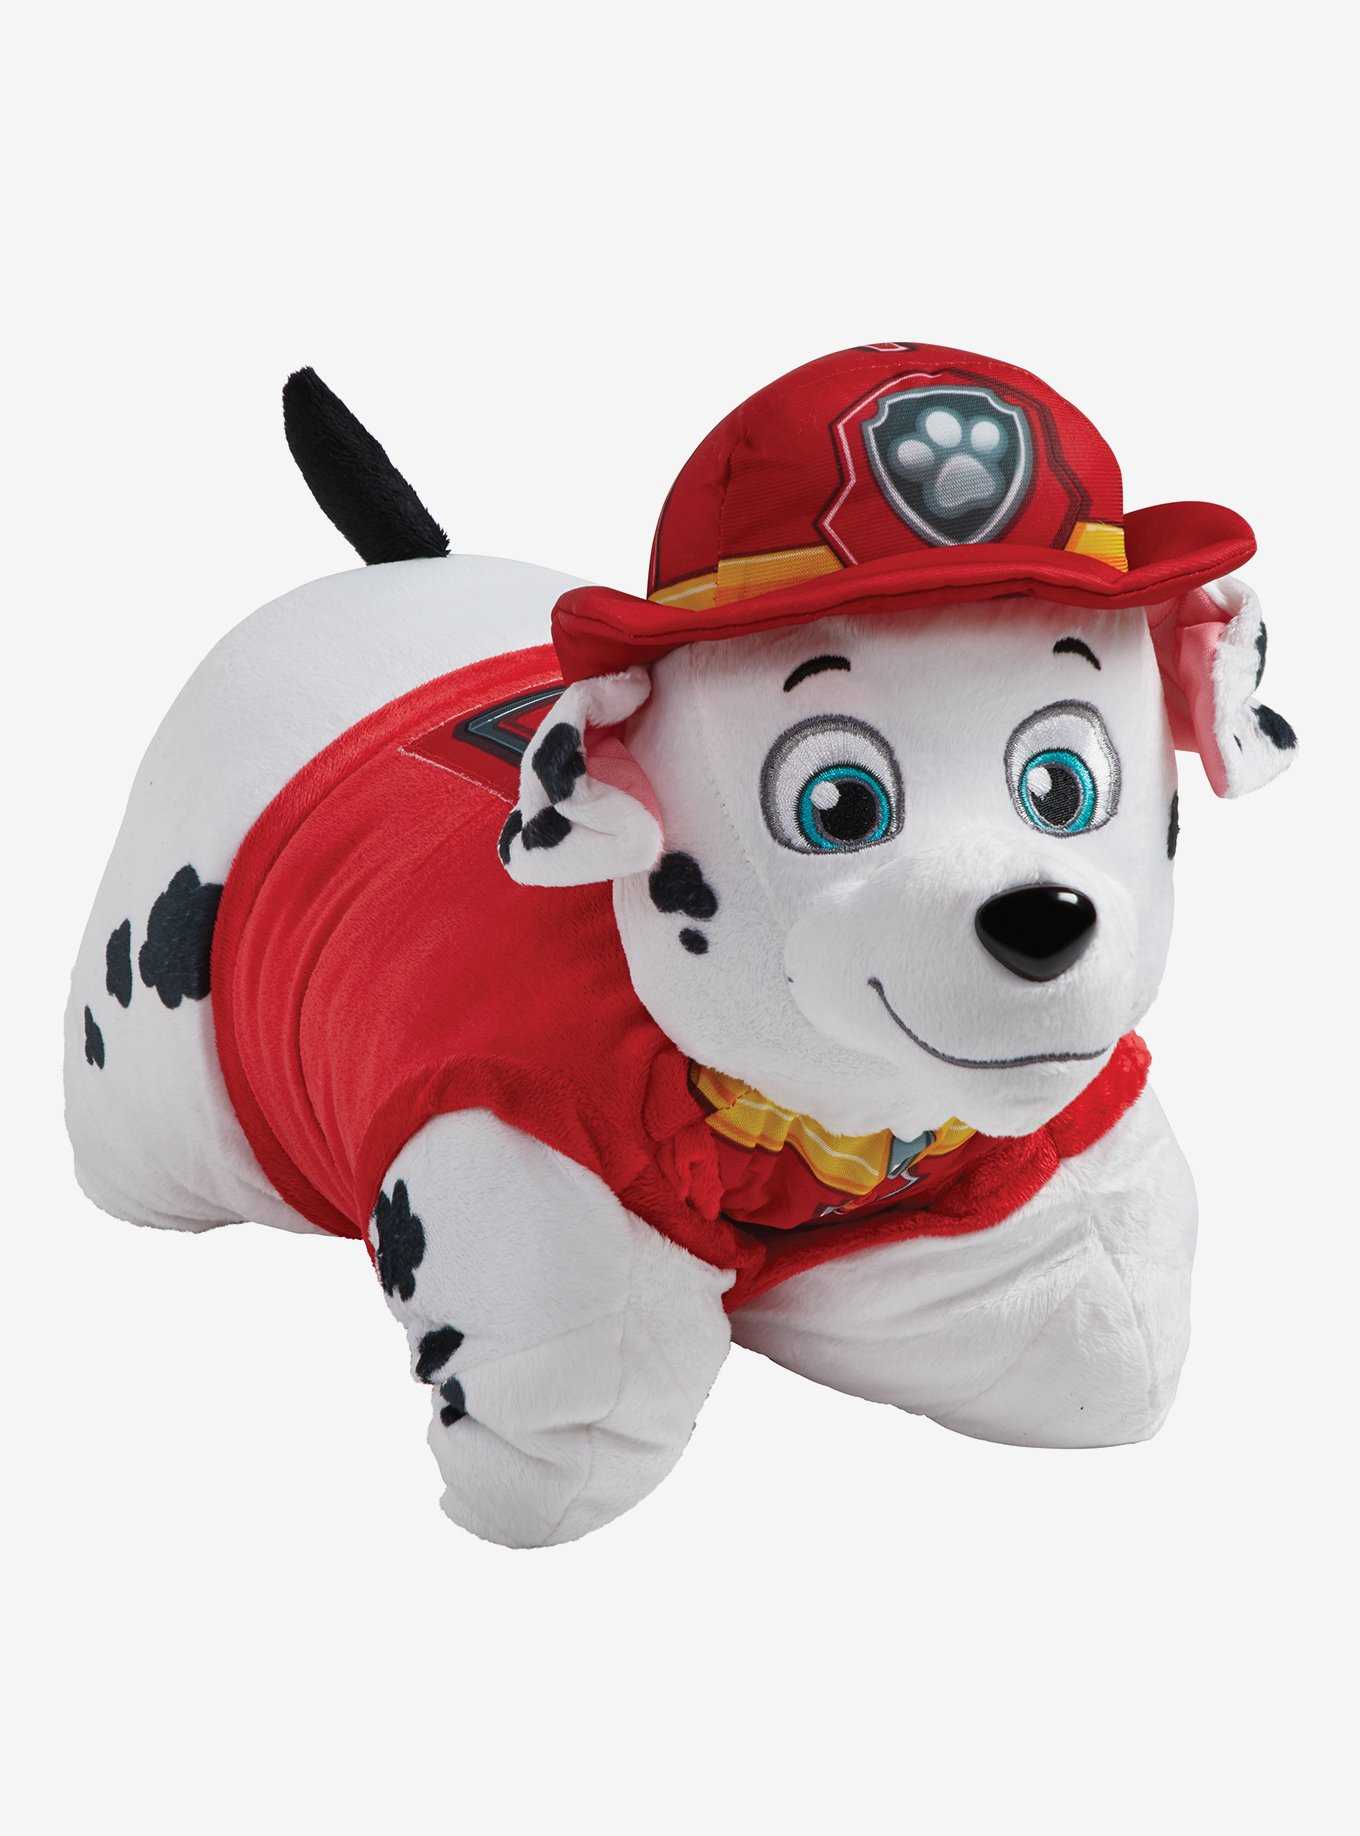 Nickelodeon Paw Patrol Jumbo Marshall Pillow Pets Plush Toy, , hi-res